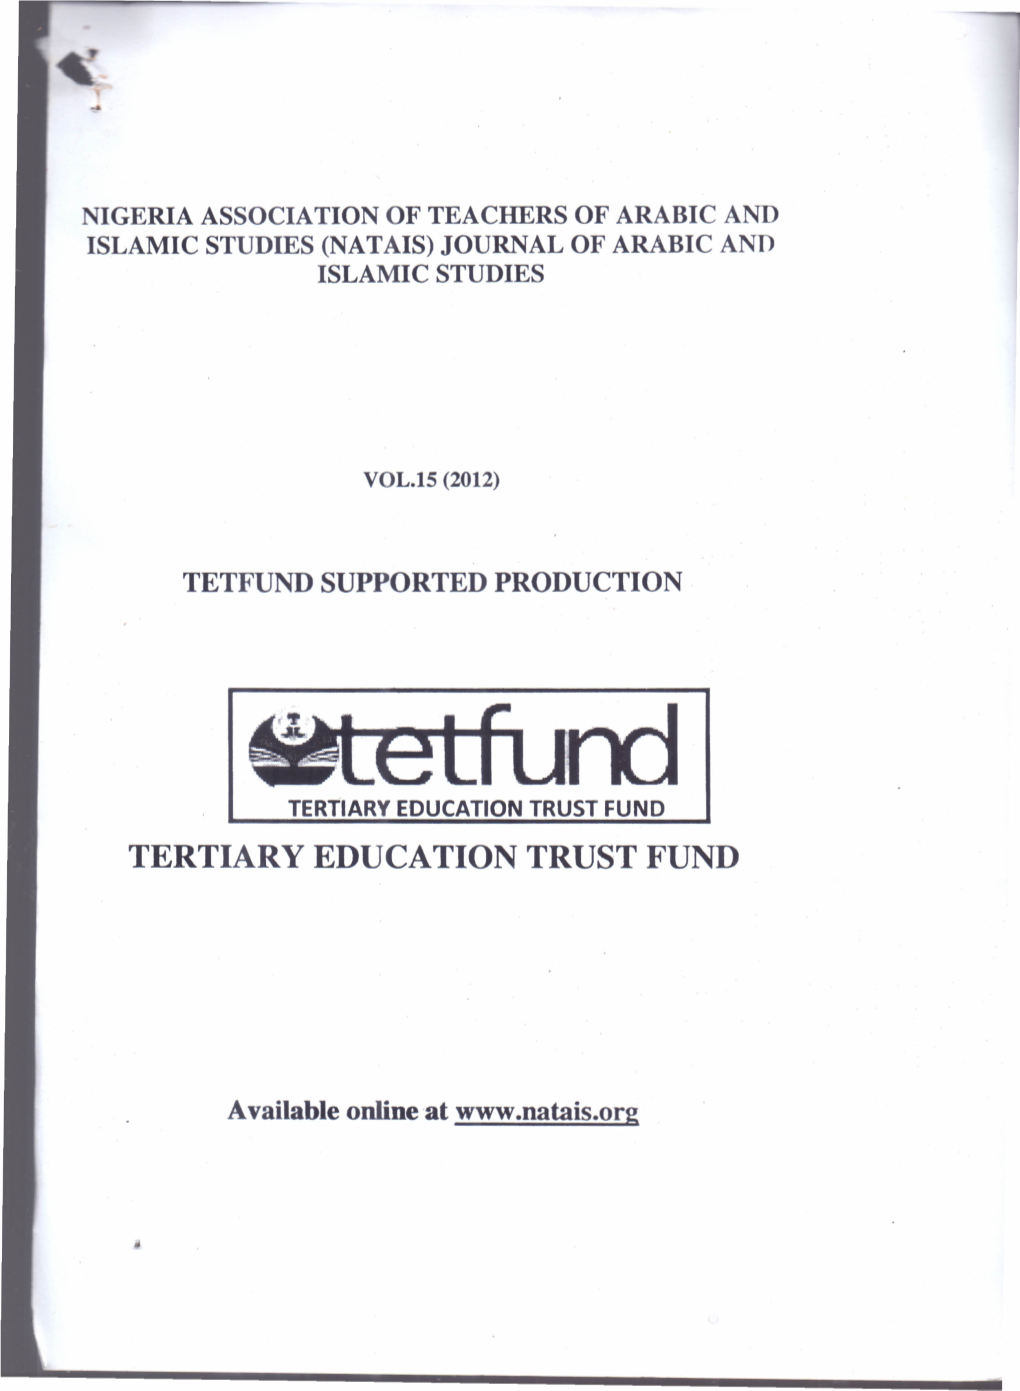 Tertiary Education Trust Fund Tertiary Education Trust Fund